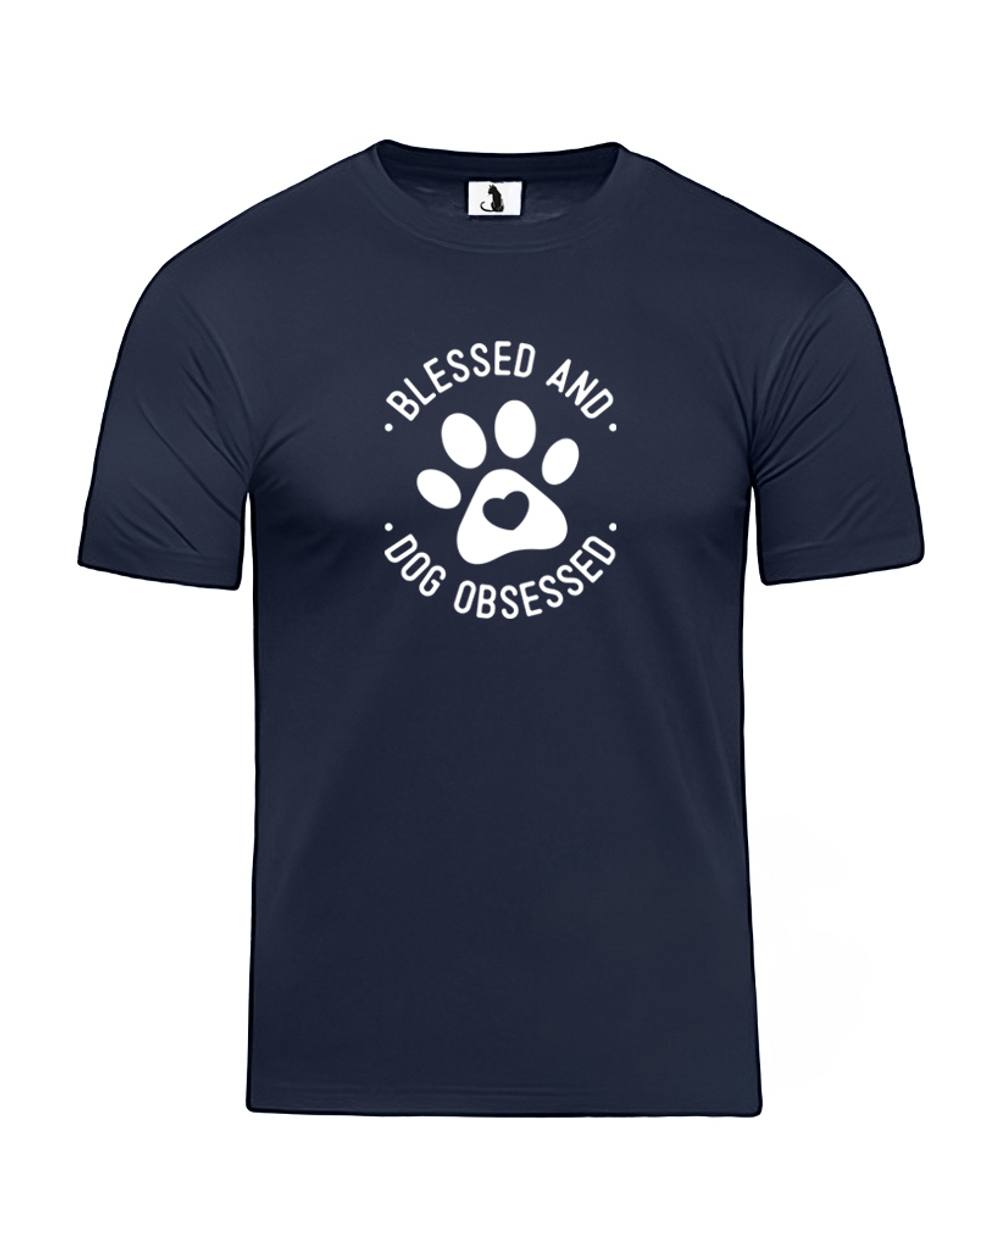 Футболка Blessed and dog obsessed unisex темно-синяя с белым рисунком